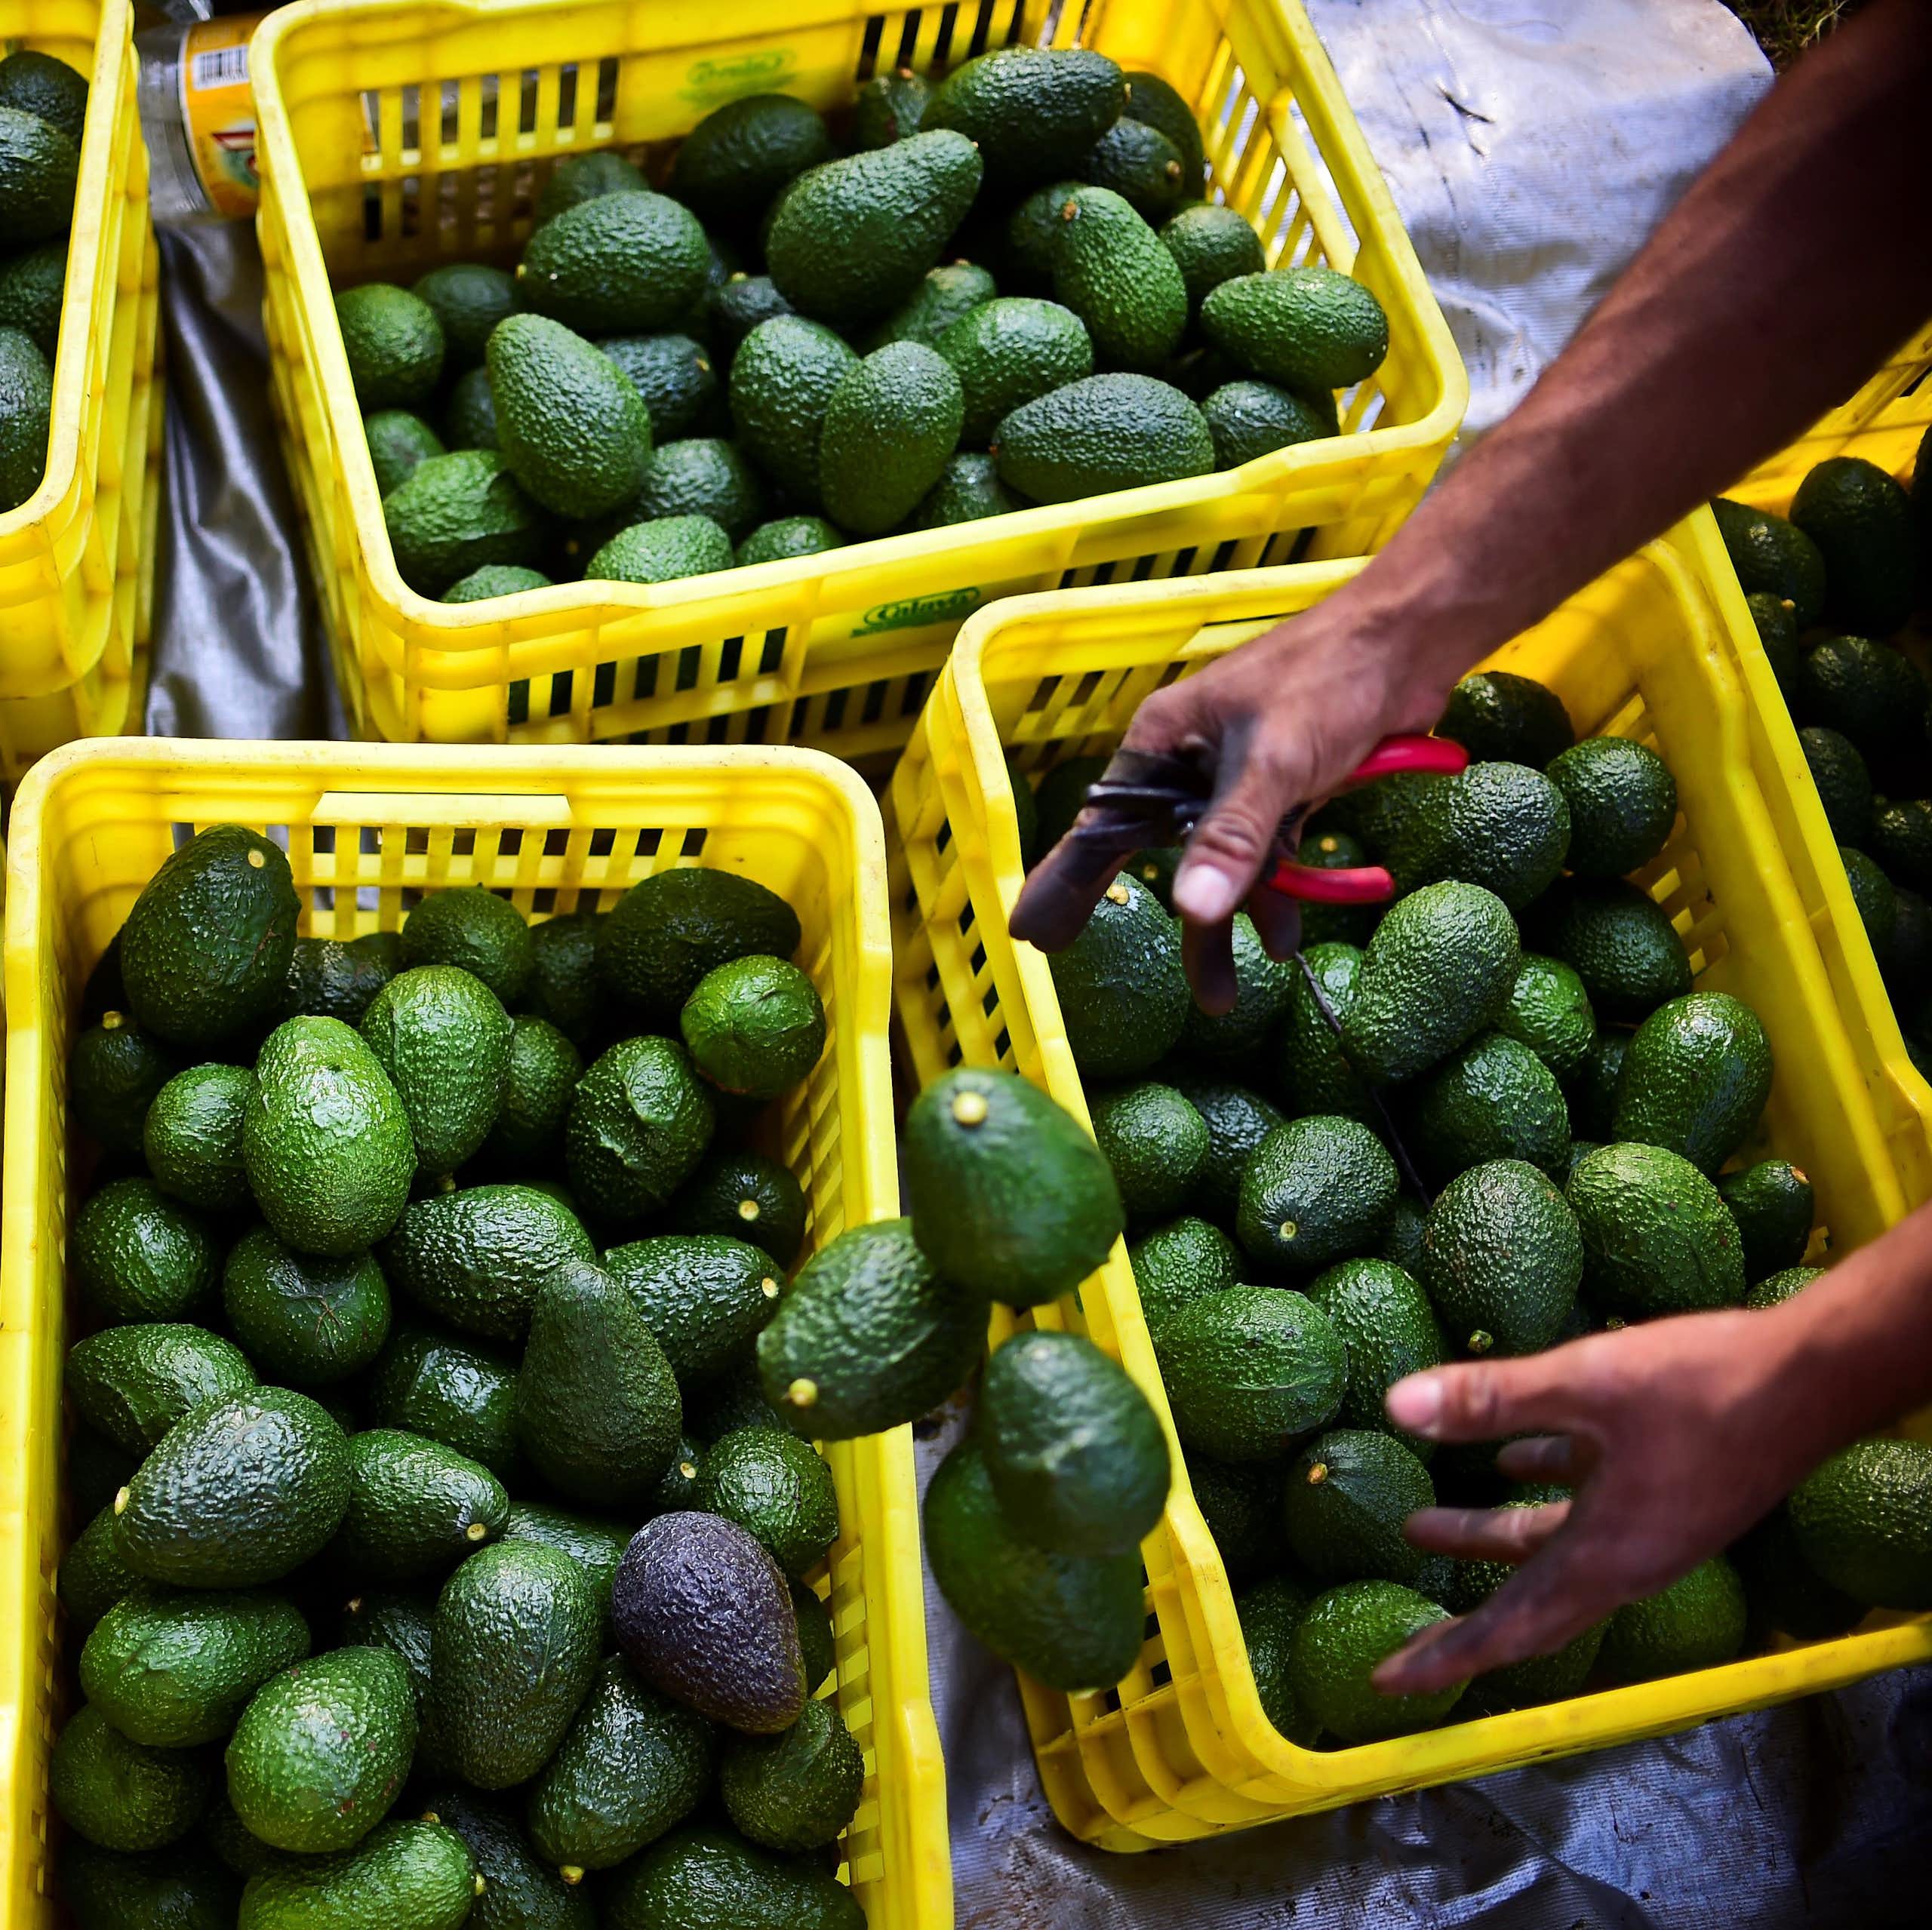 Hands drop Hass avocados  into plastic baskets